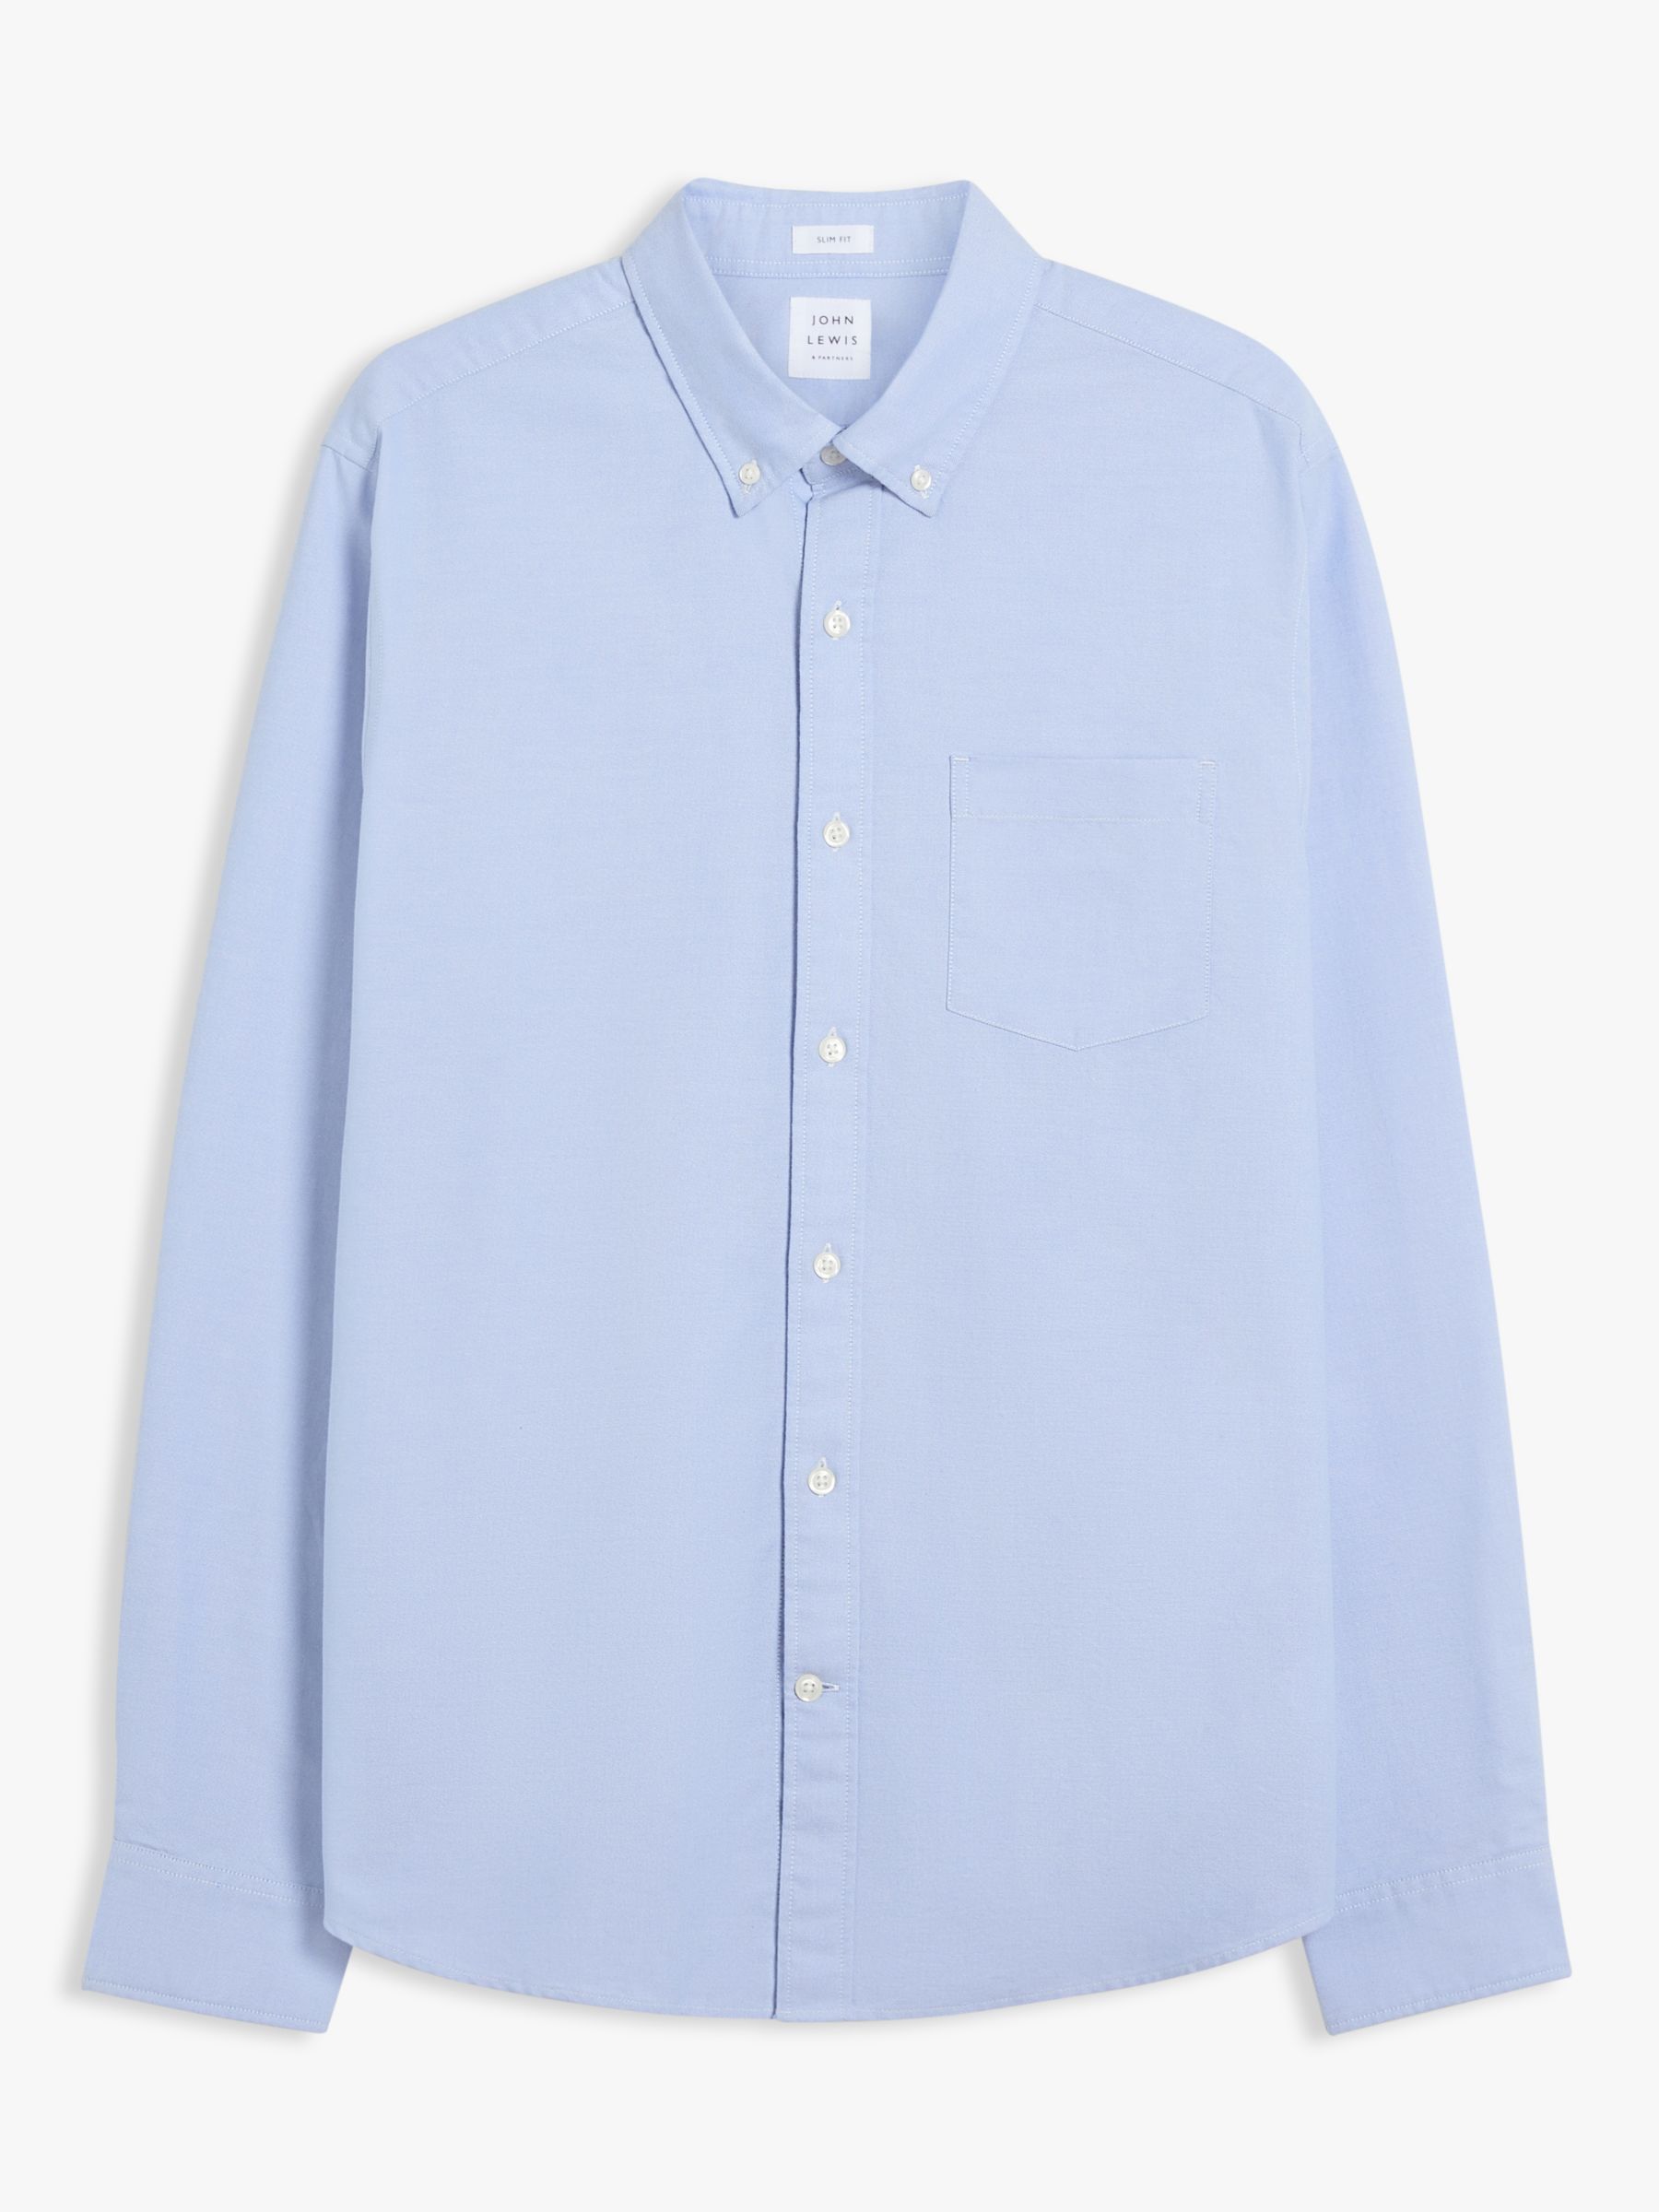 John Lewis Slim Fit Cotton Oxford Button Down Shirt, Blue at John Lewis ...